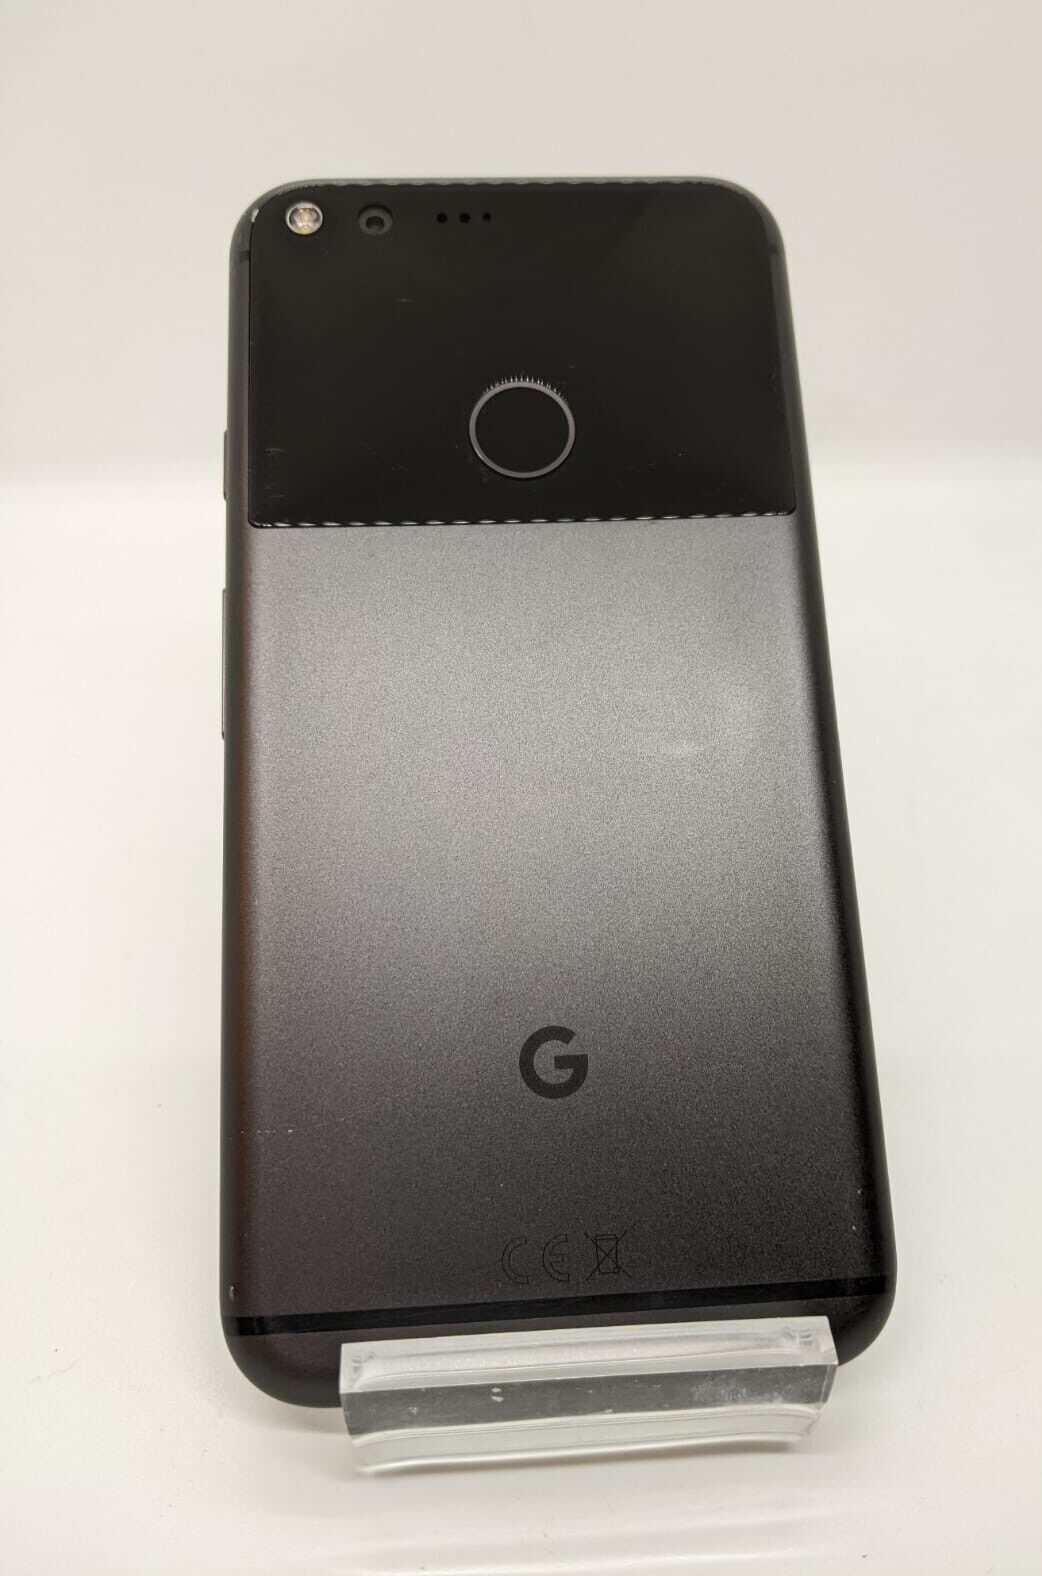 Google Pixel XL 128GB Unlocked 4G LTE Smartphone 2PW2100 Unlockable Bootloader